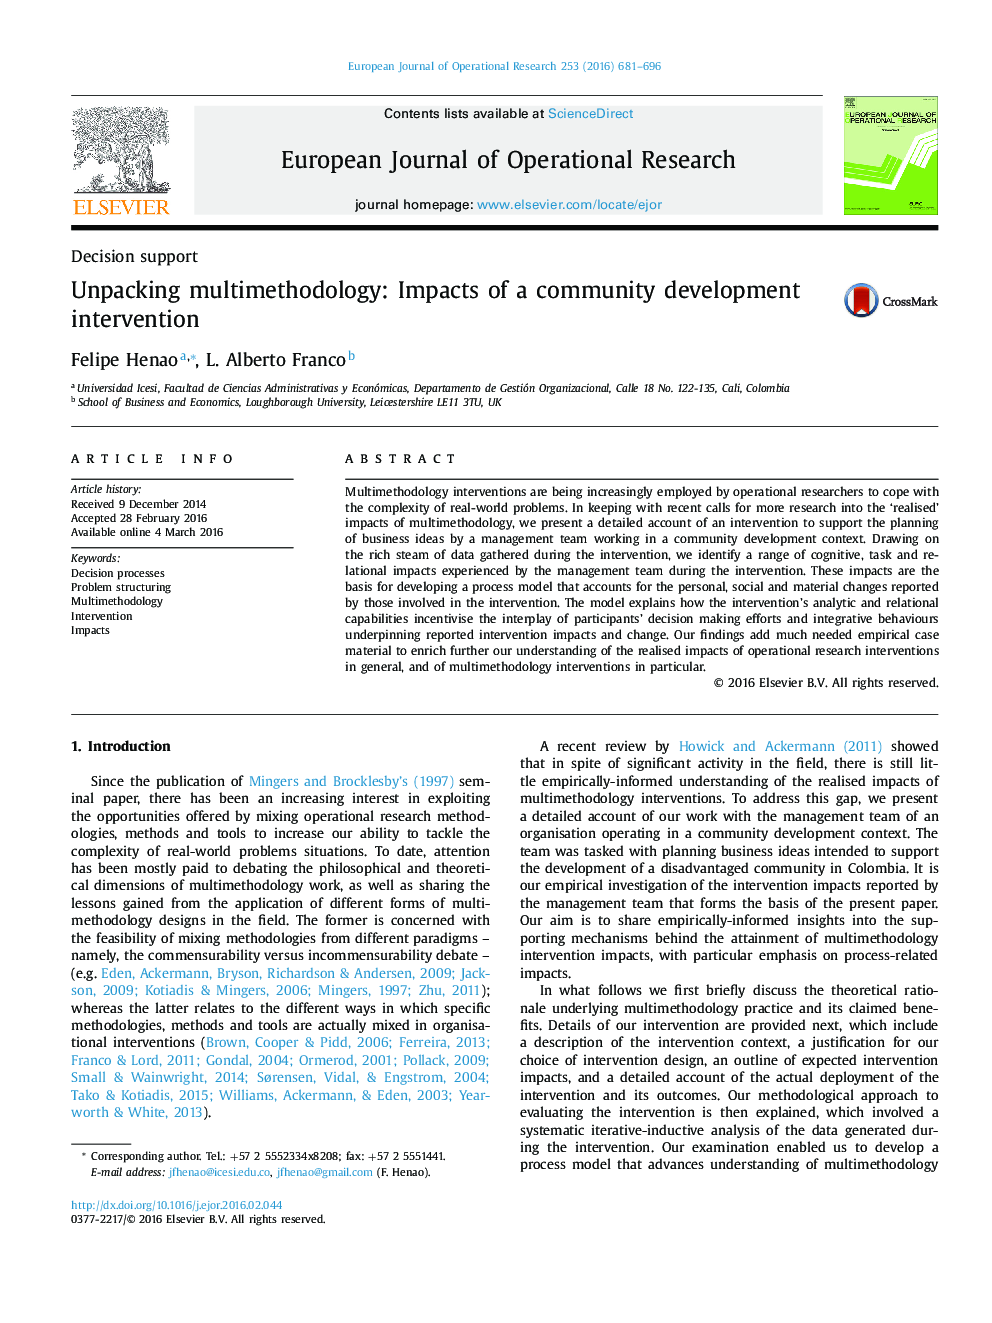 Unpacking multimethodology: Impacts of a community development intervention